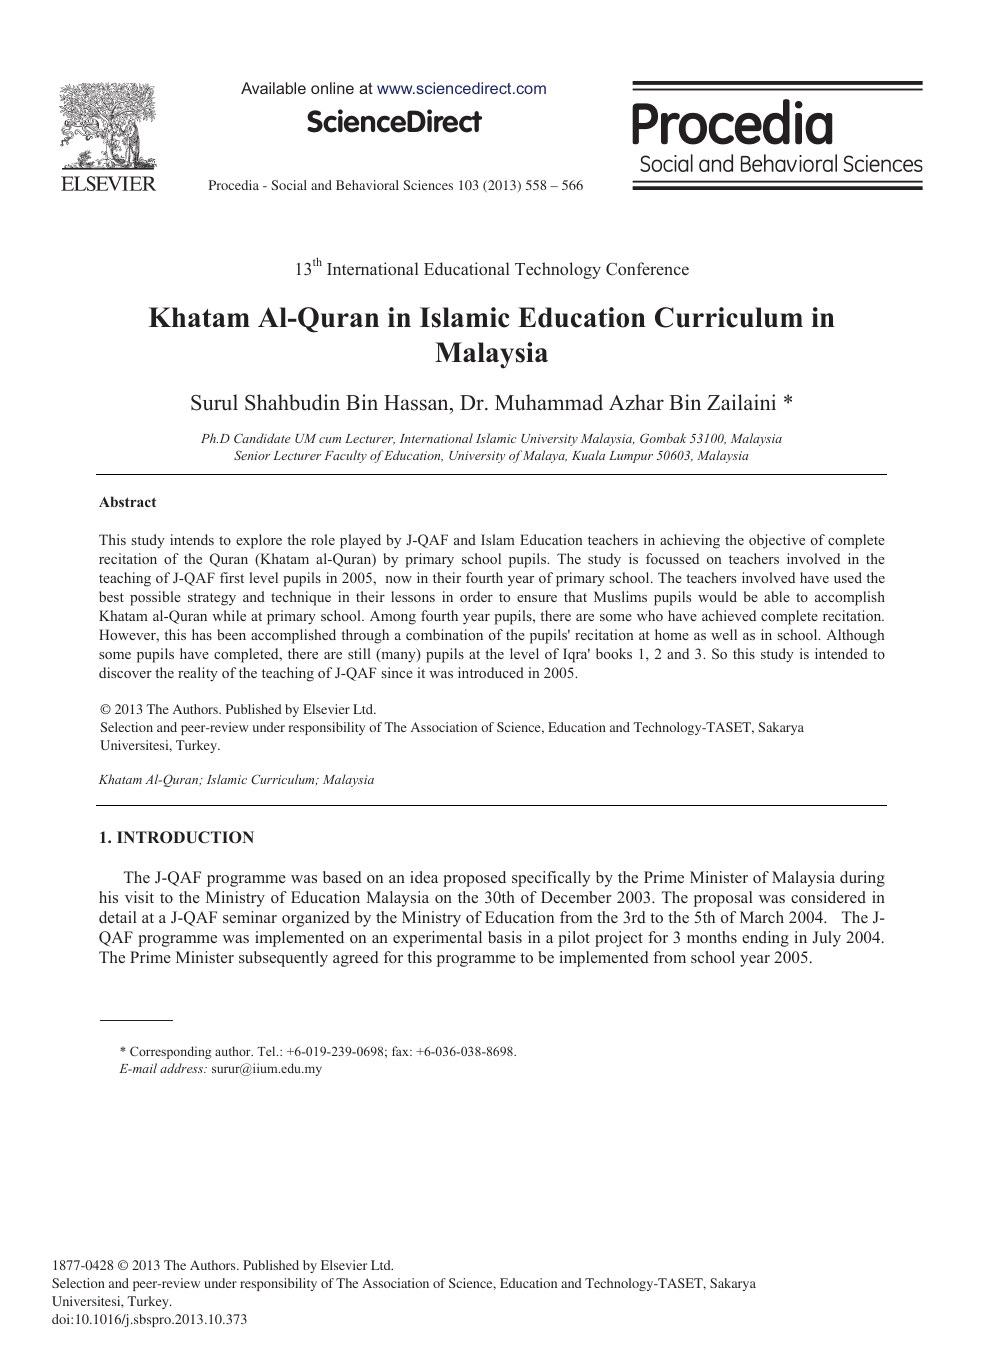 Al quran online malaysia